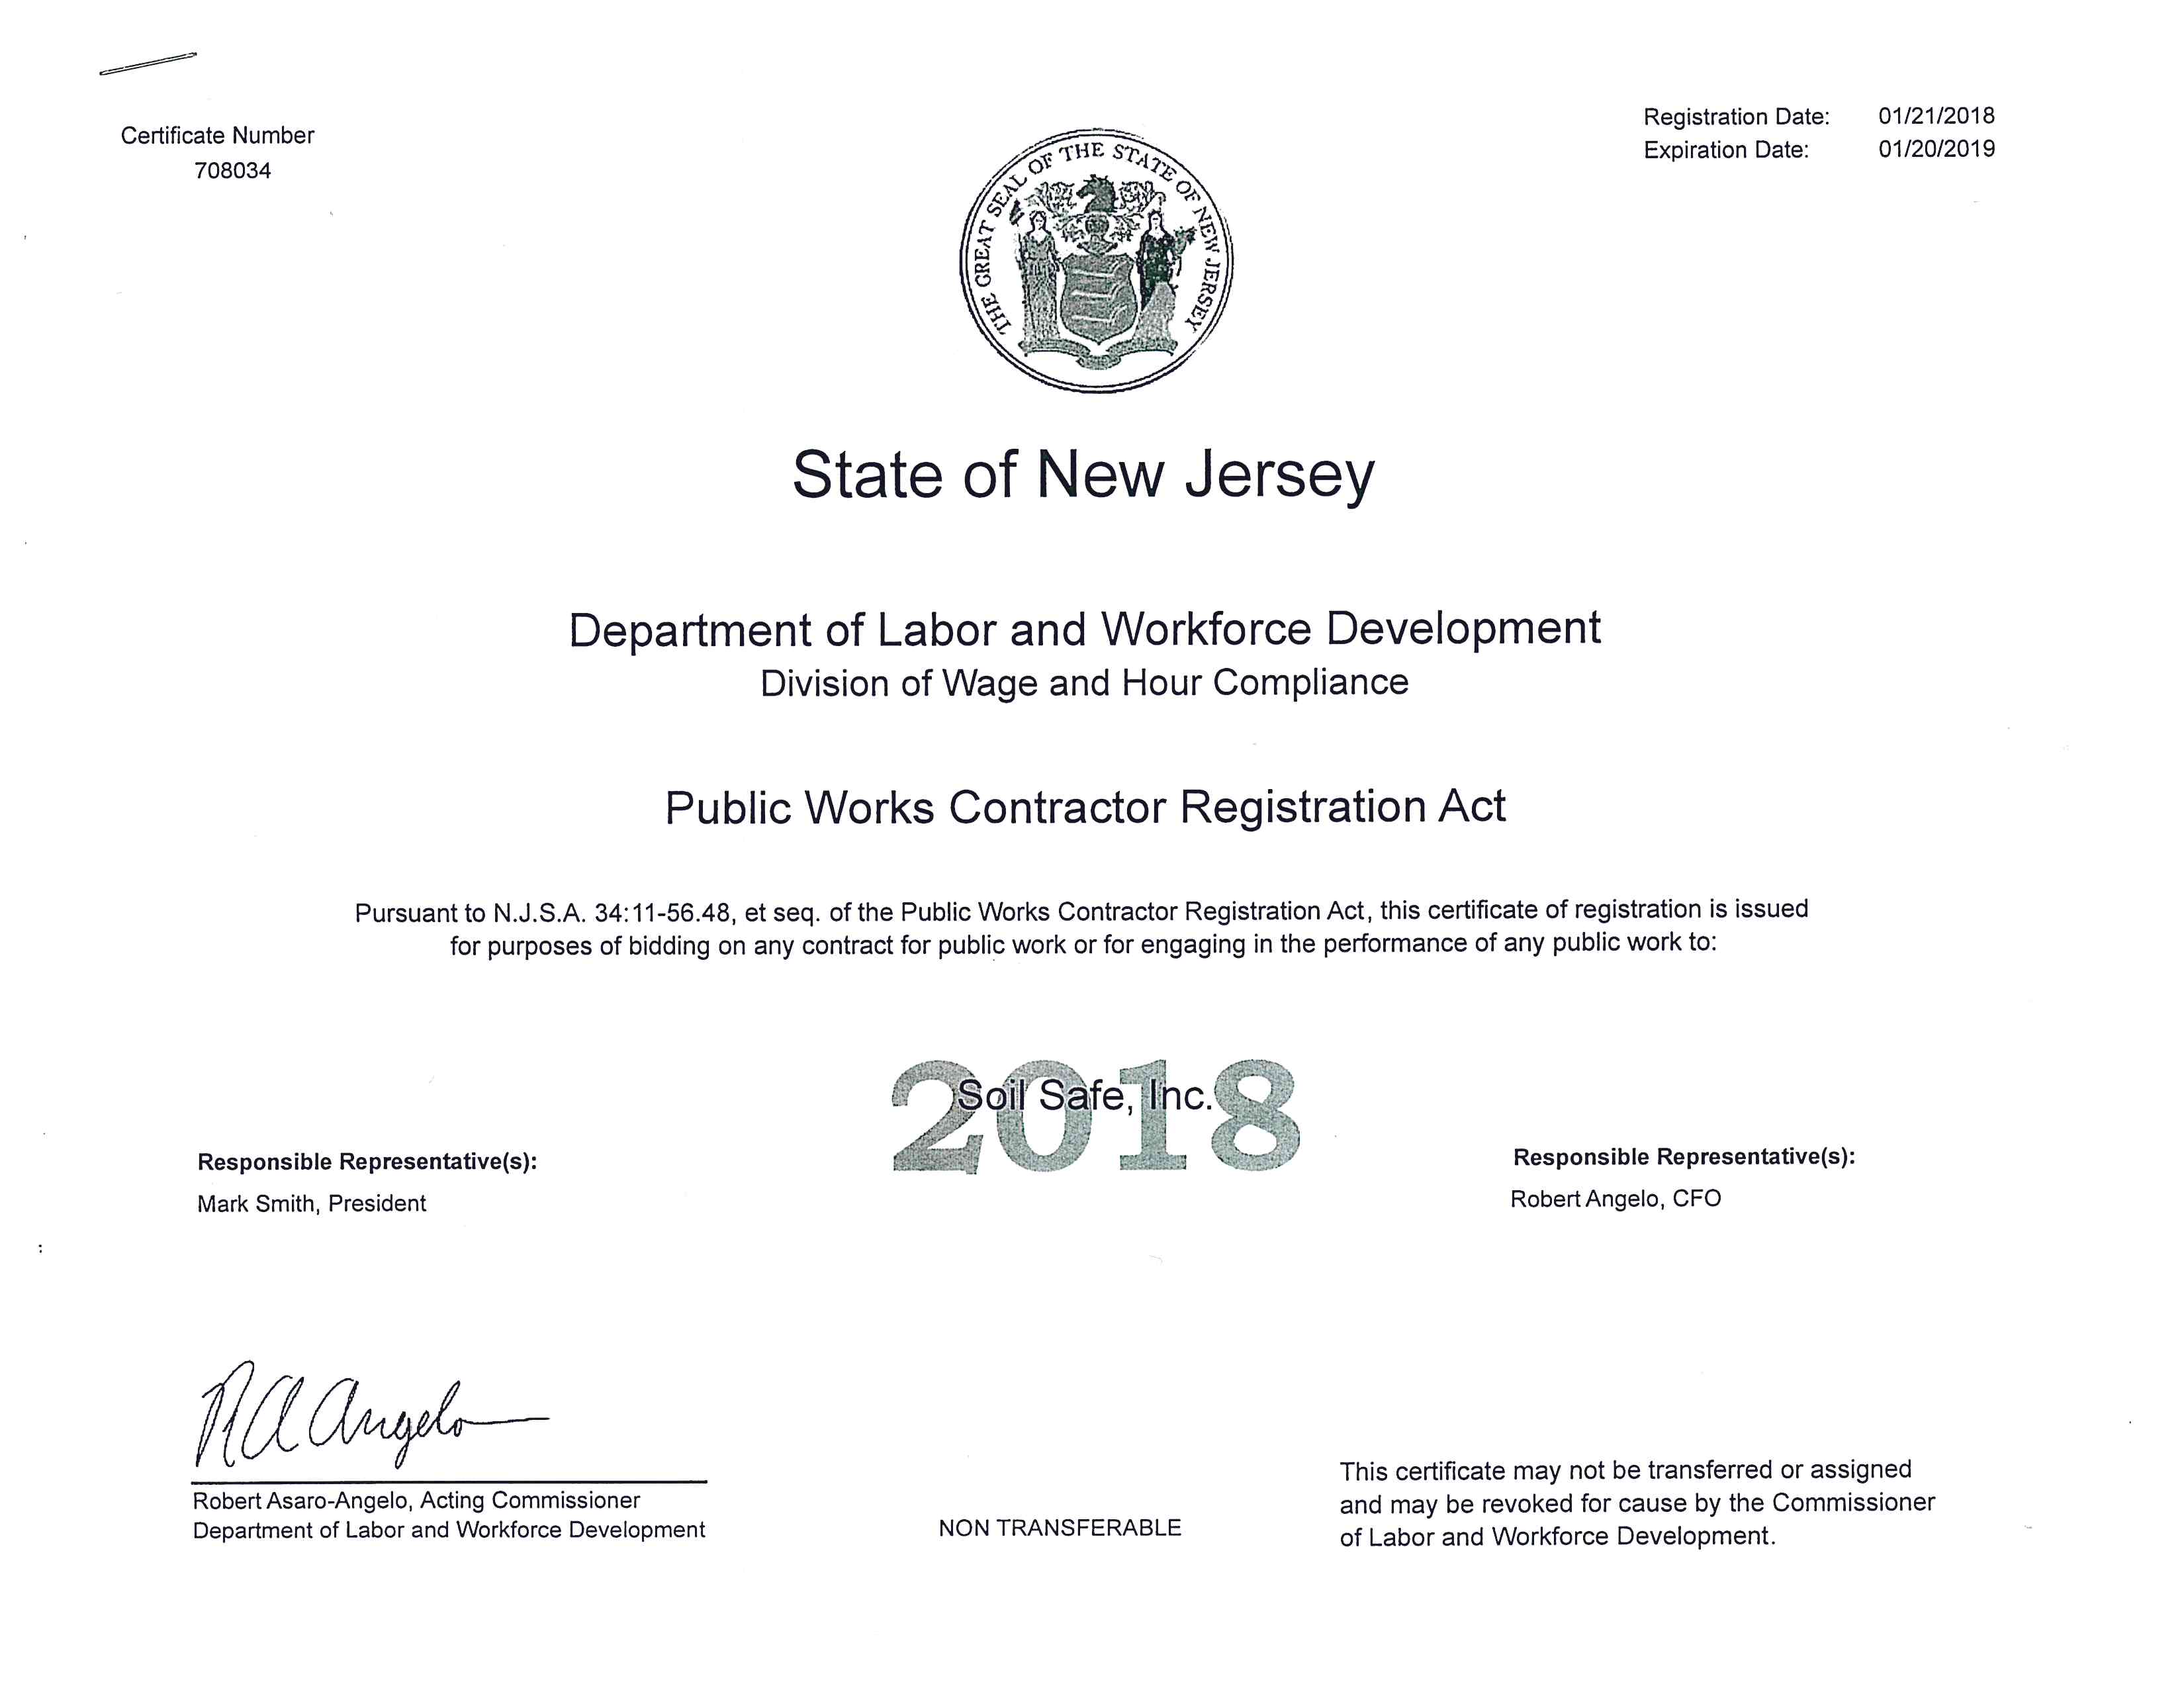 New Jersey – Public Works Contractor Registration Certificate